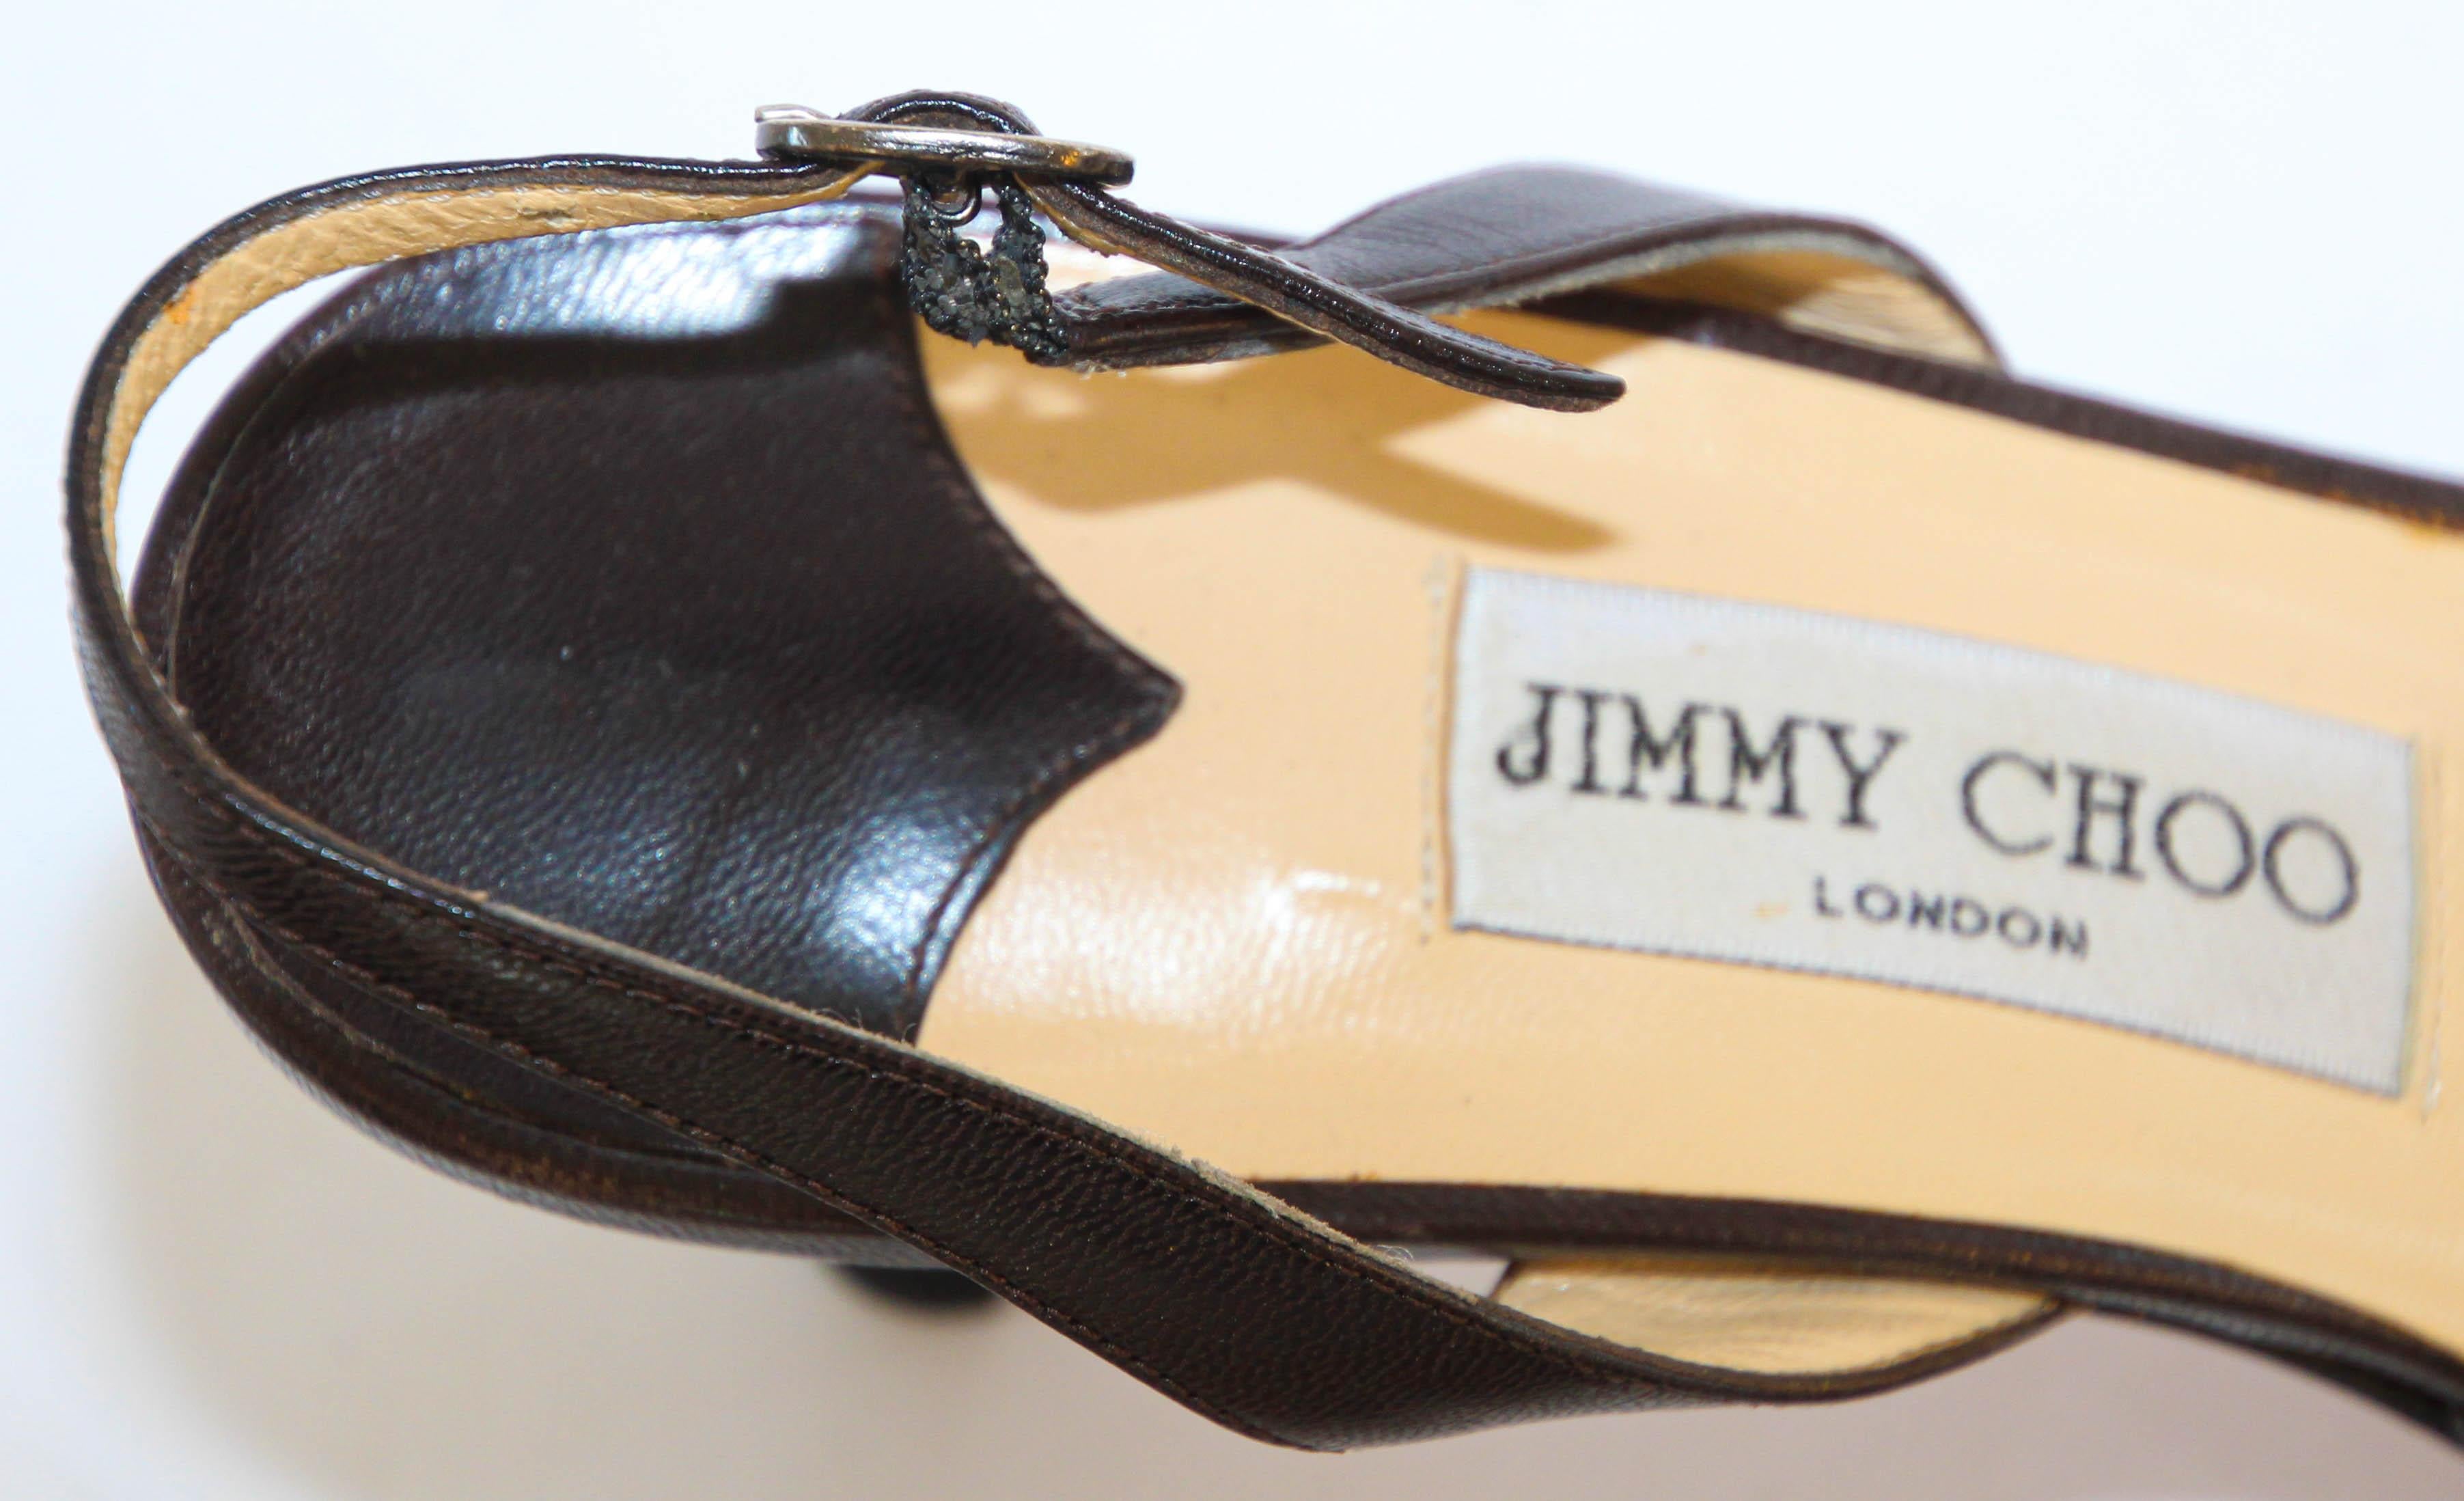 JIMMY CHOO London Dark Brown Leather Slingback Pumps 39.5 1